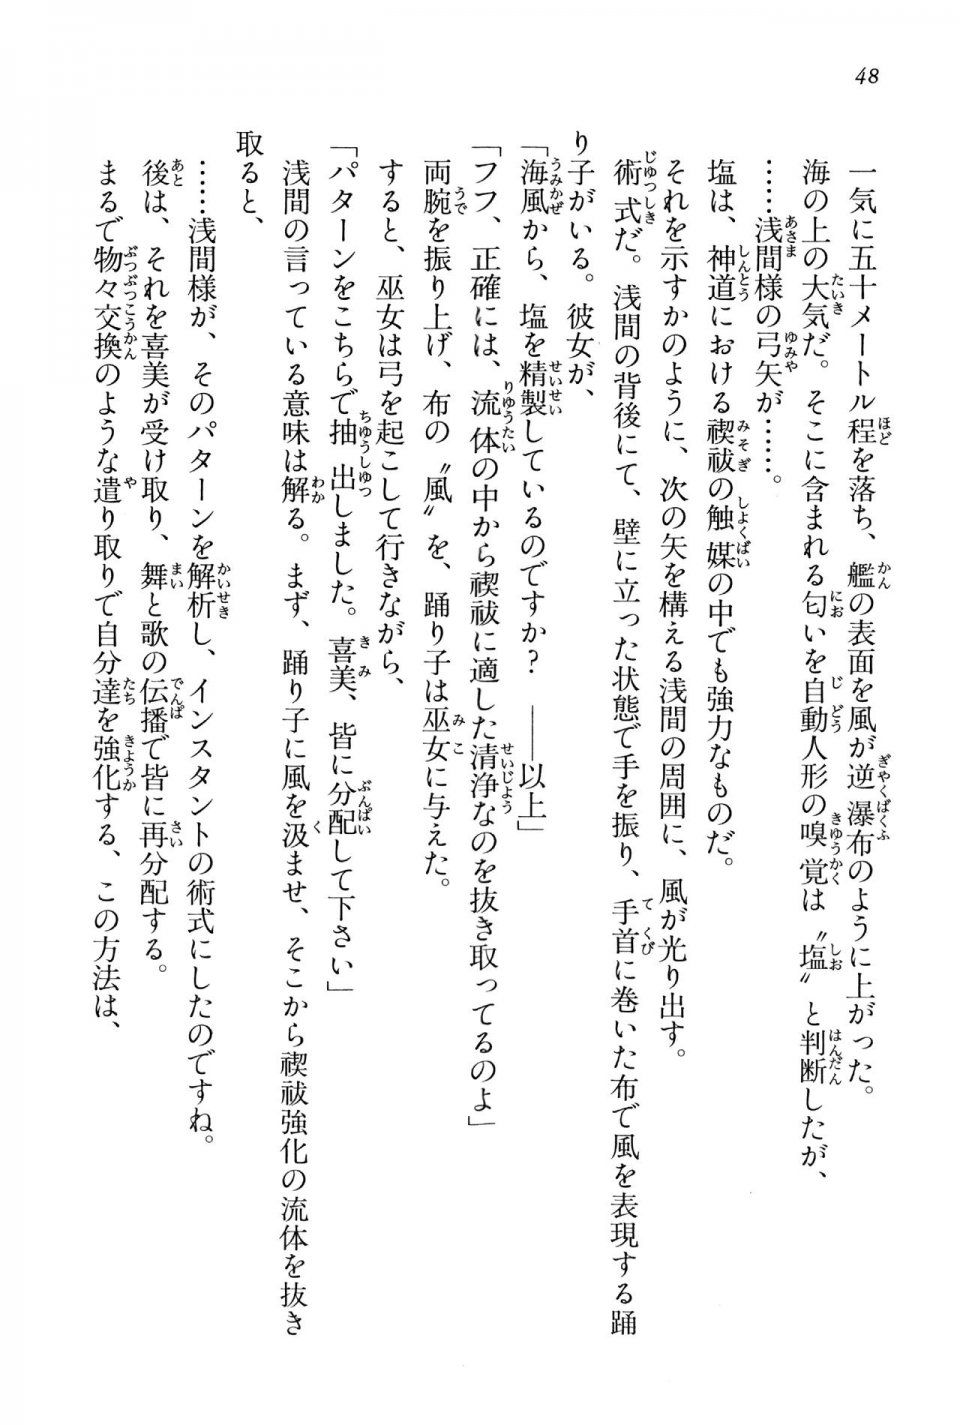 Kyoukai Senjou no Horizon BD Special Mininovel Vol 4(2B) - Photo #52